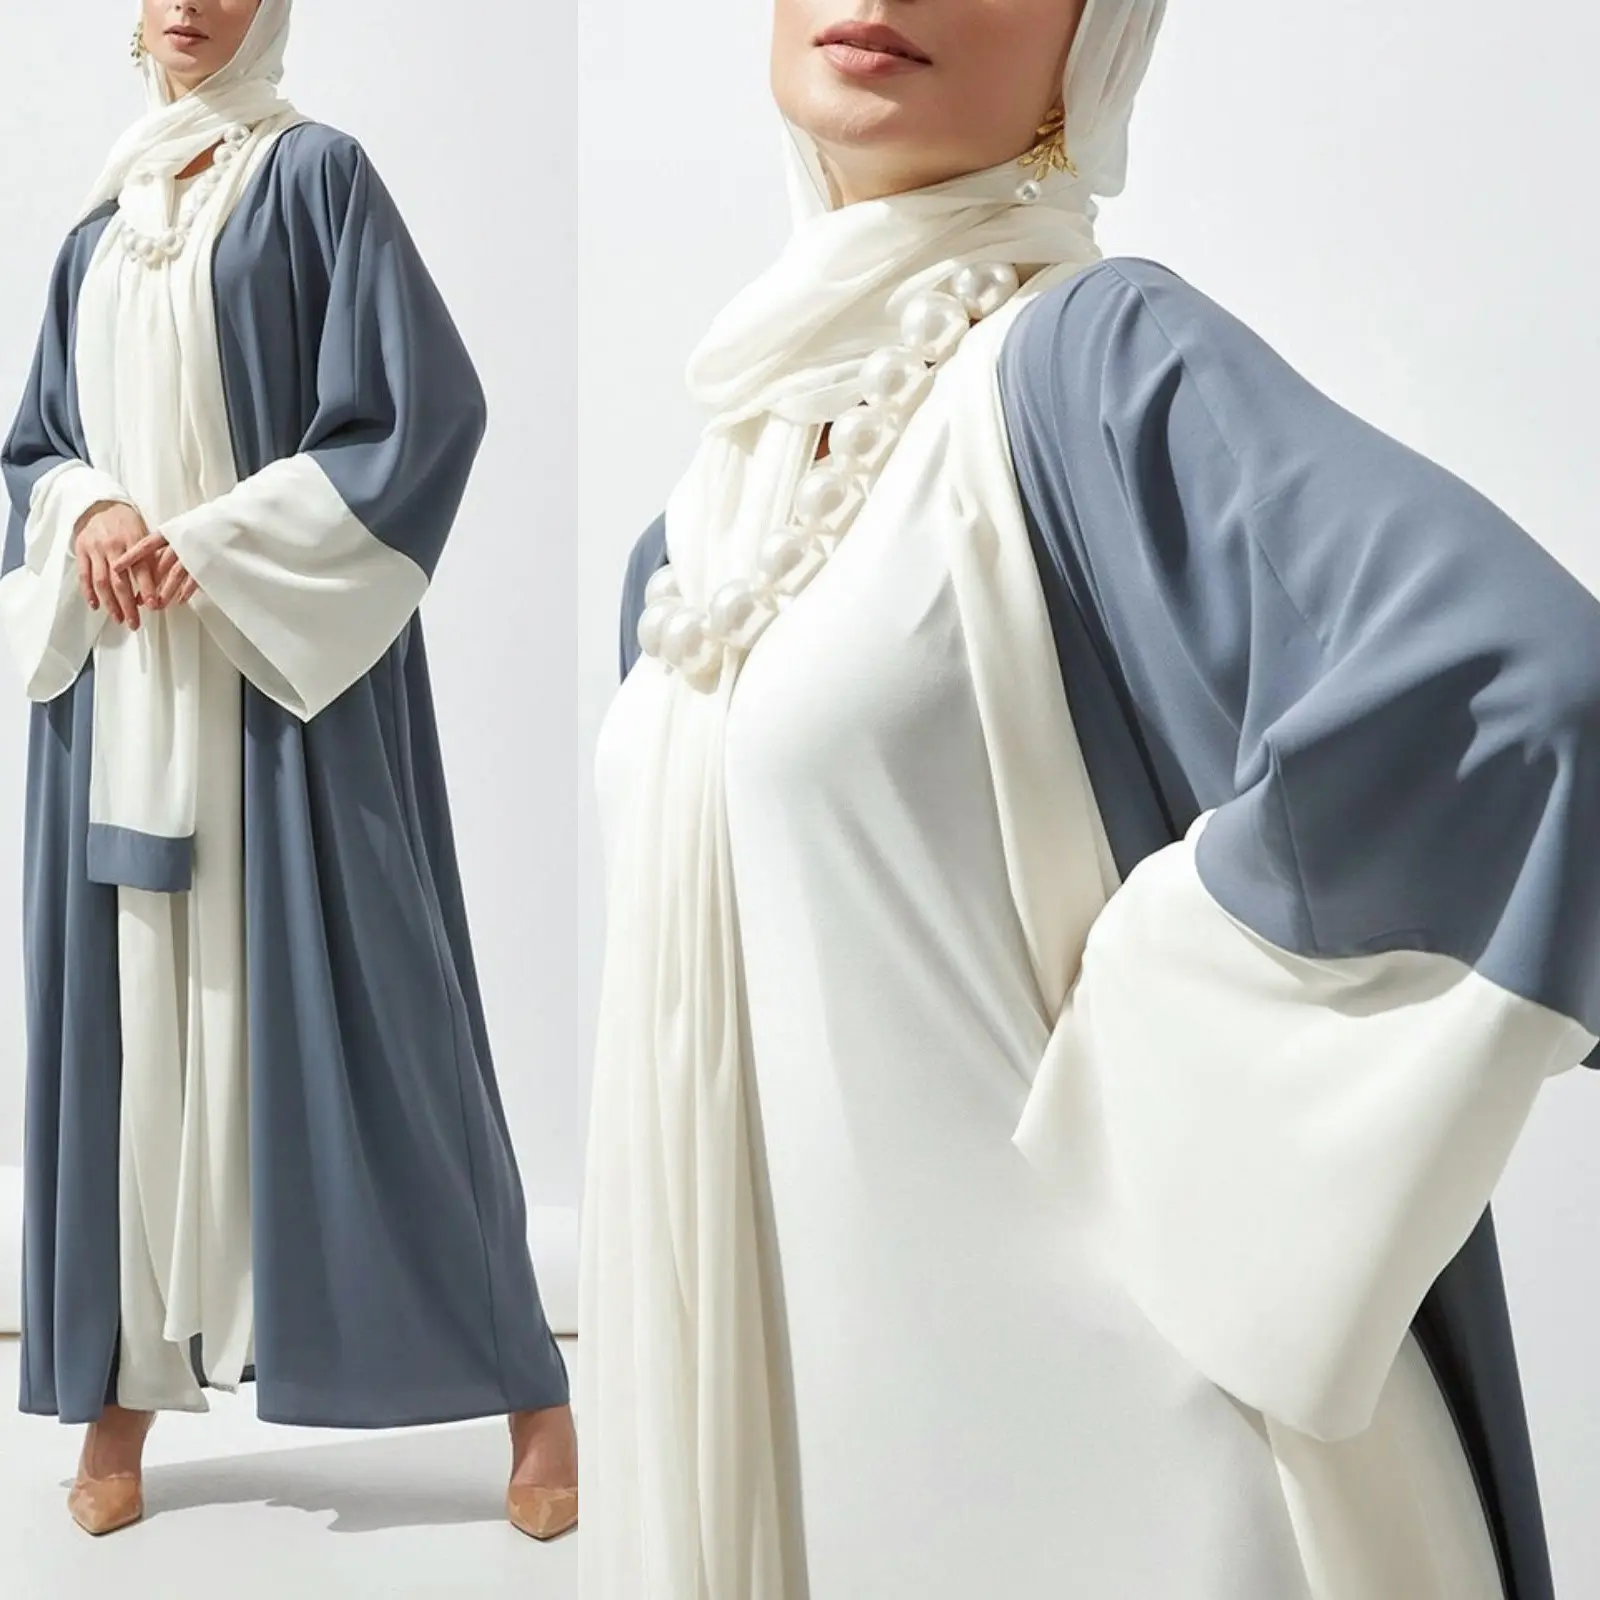 AM042 muslim ladies luxury Dubai abaya robe with scarf free size customized logo chiffon Muslim robe wholesale low moq skirt